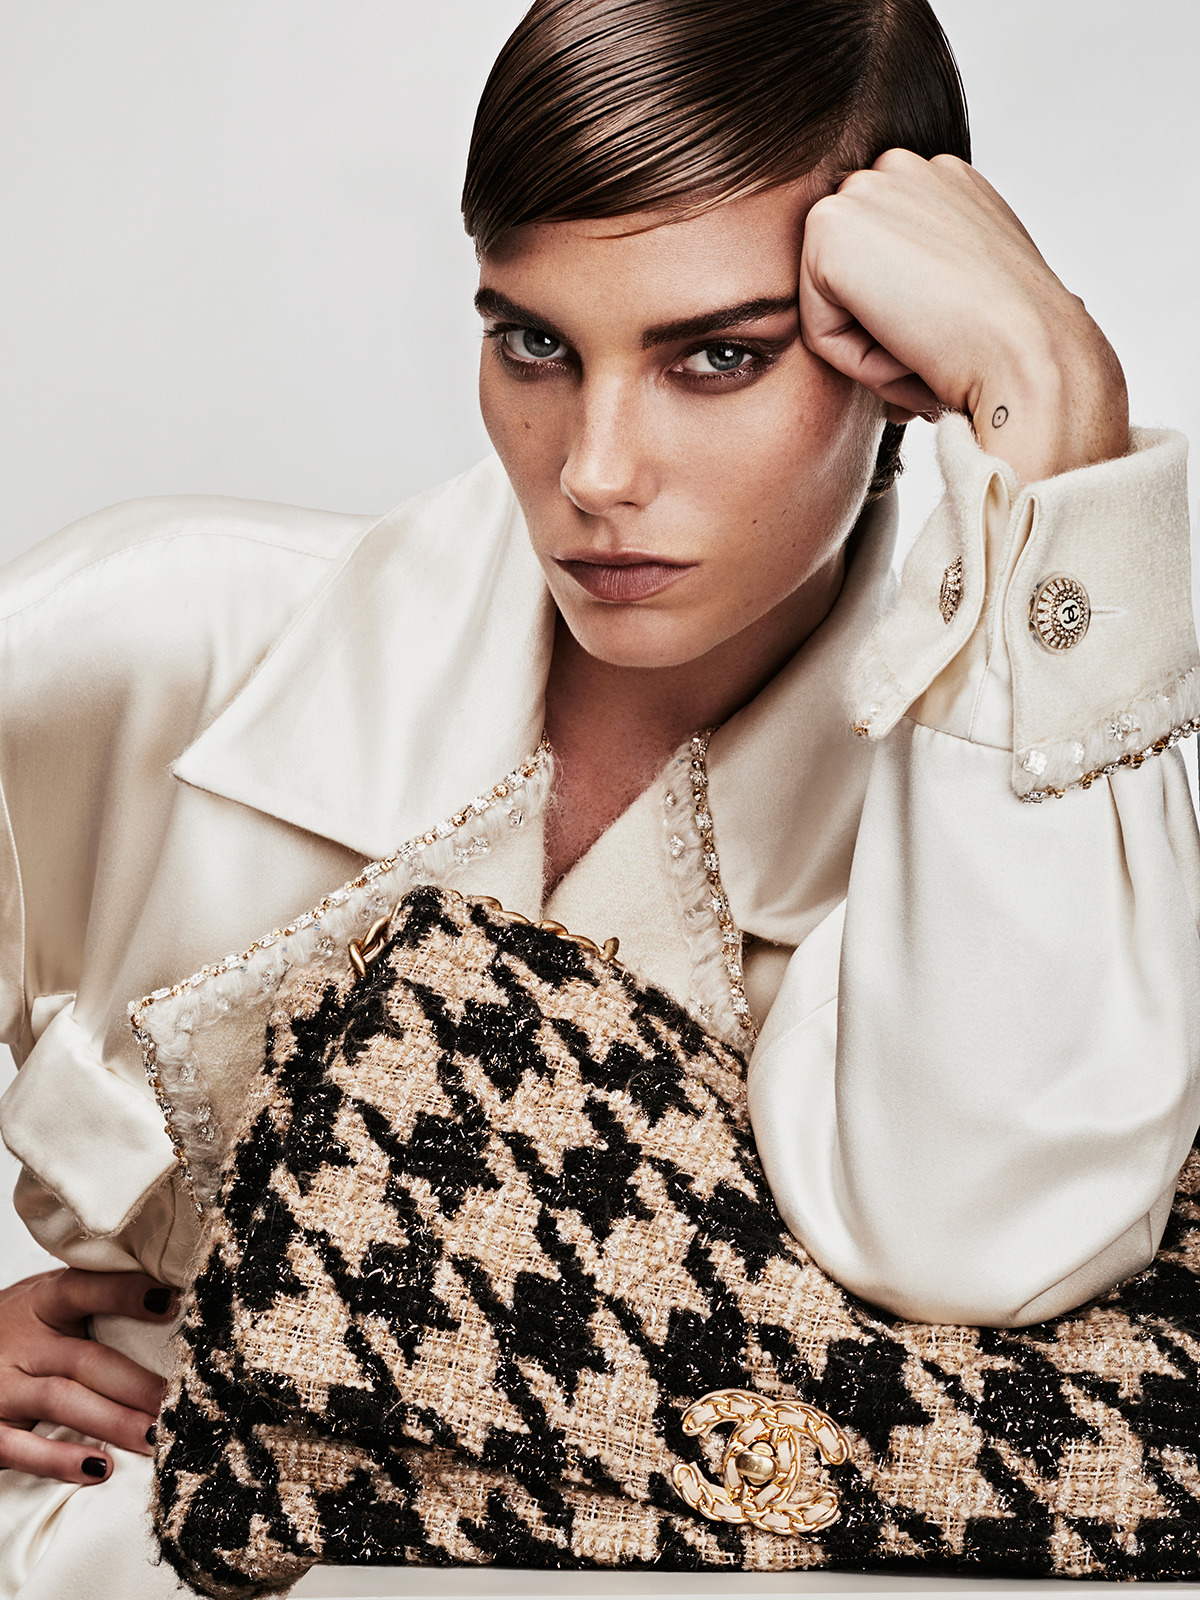 The Shoot: High Contrast Chanel Beauty by Toni Malt - MOJEH